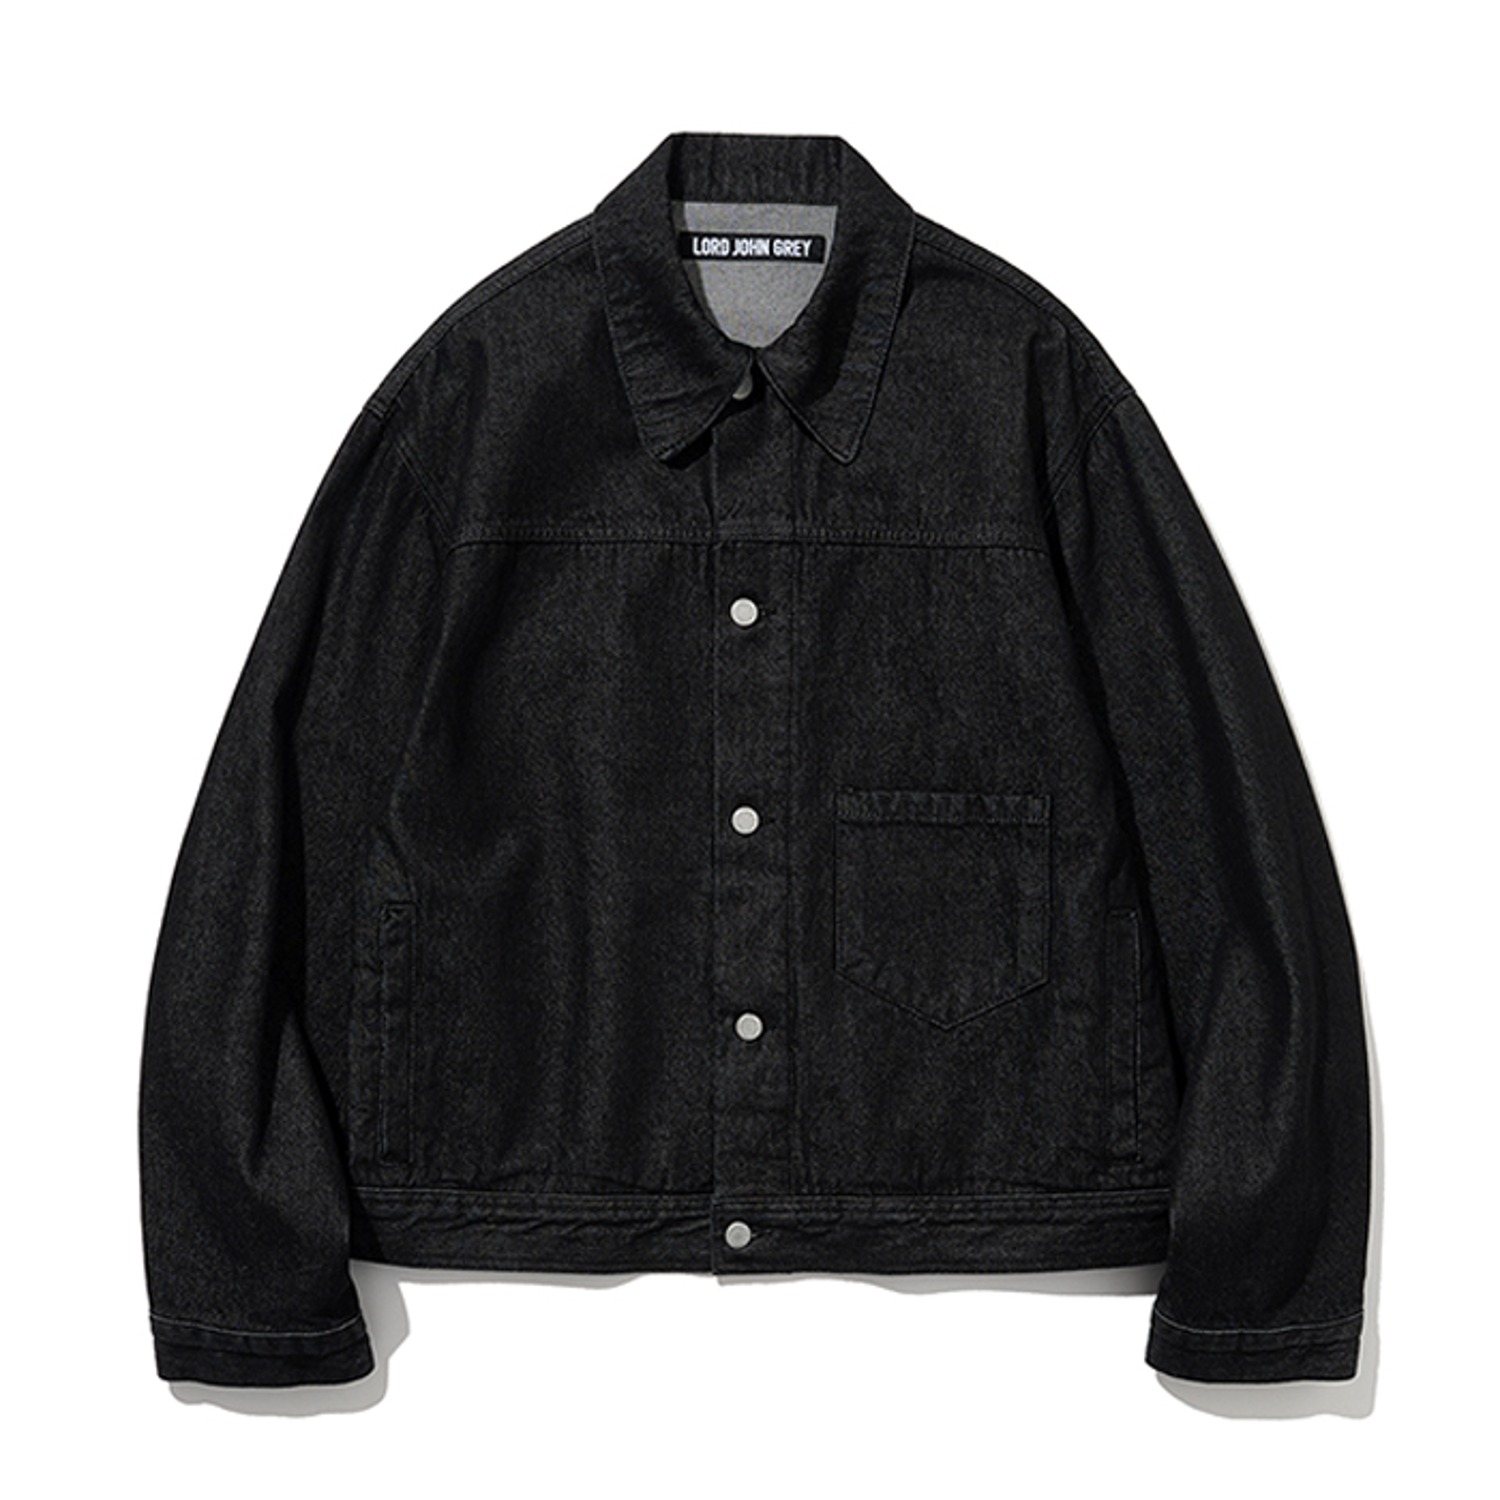 23ss denim trucker jacket black washed